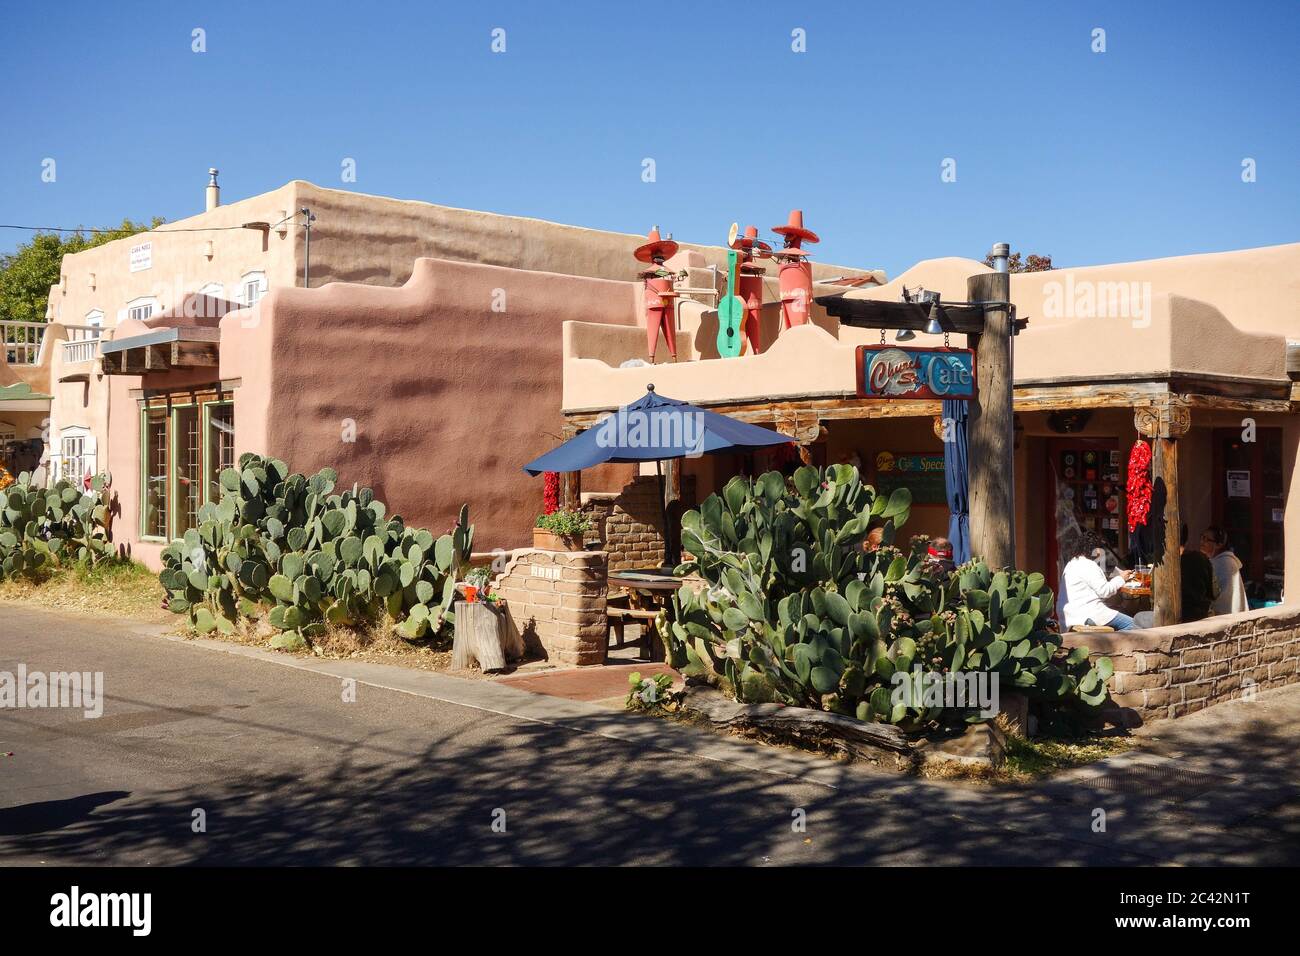 Church street Cafe in Albuquerque, NM Stock Photo